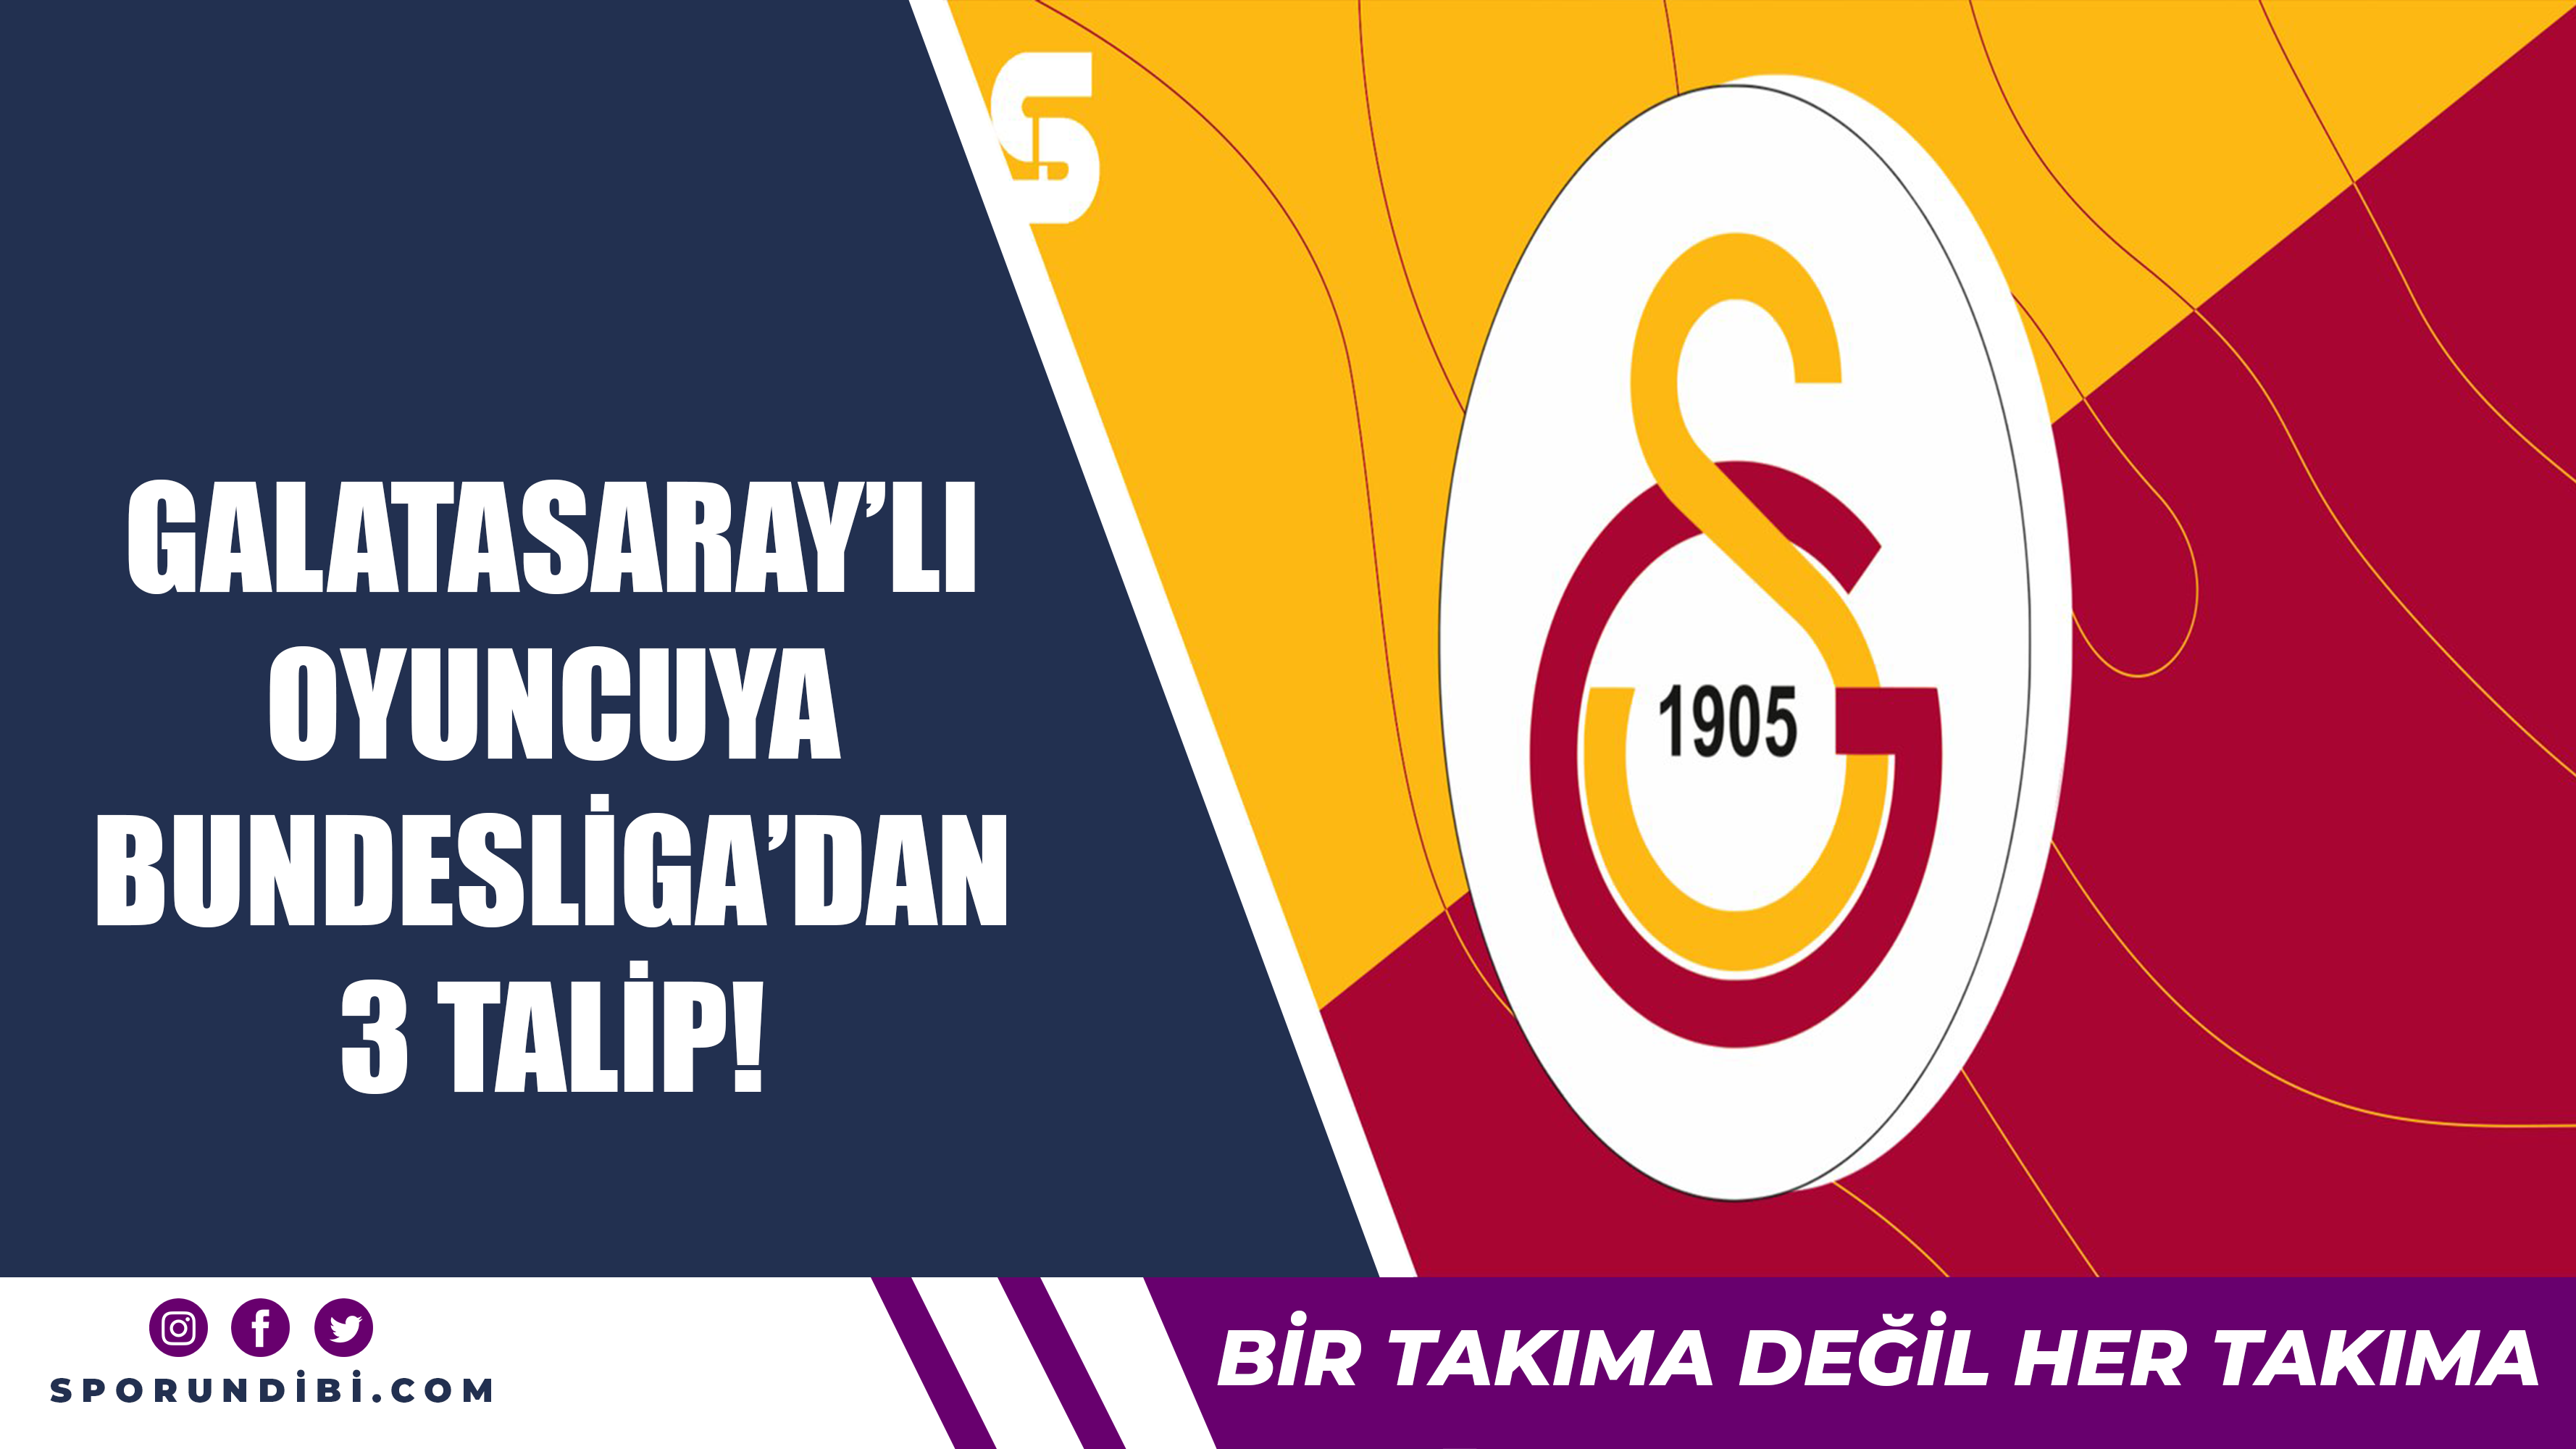 Galatasaray'lı oyuncuya Bundesliga'dan 3 talip!